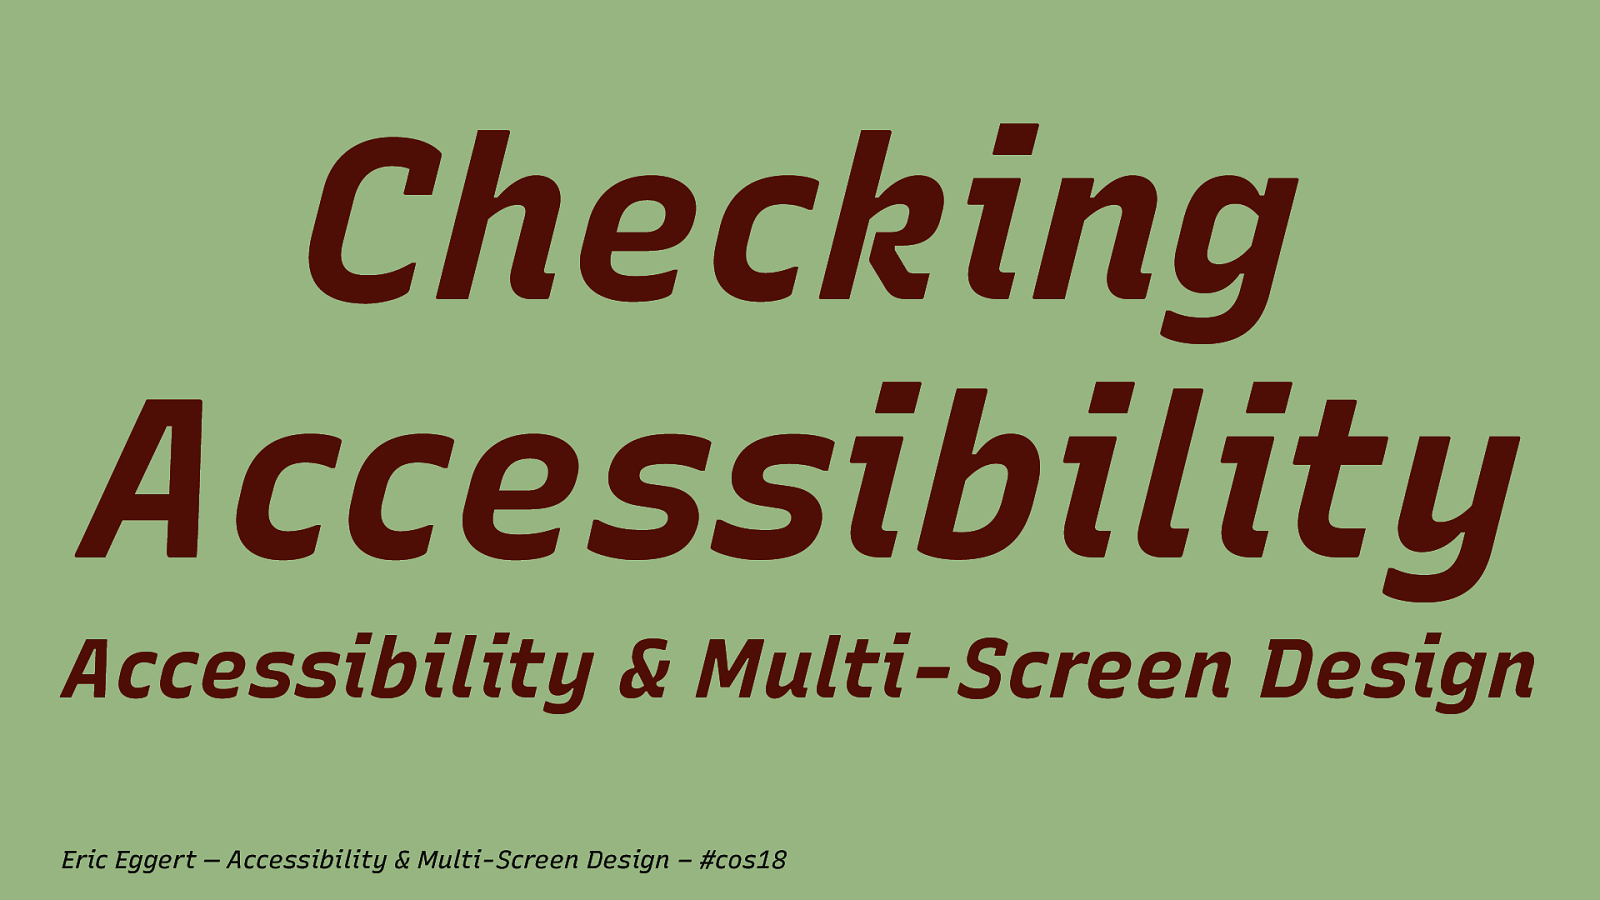 Accessibility & Multi-Screen Design: Checking Accessibility